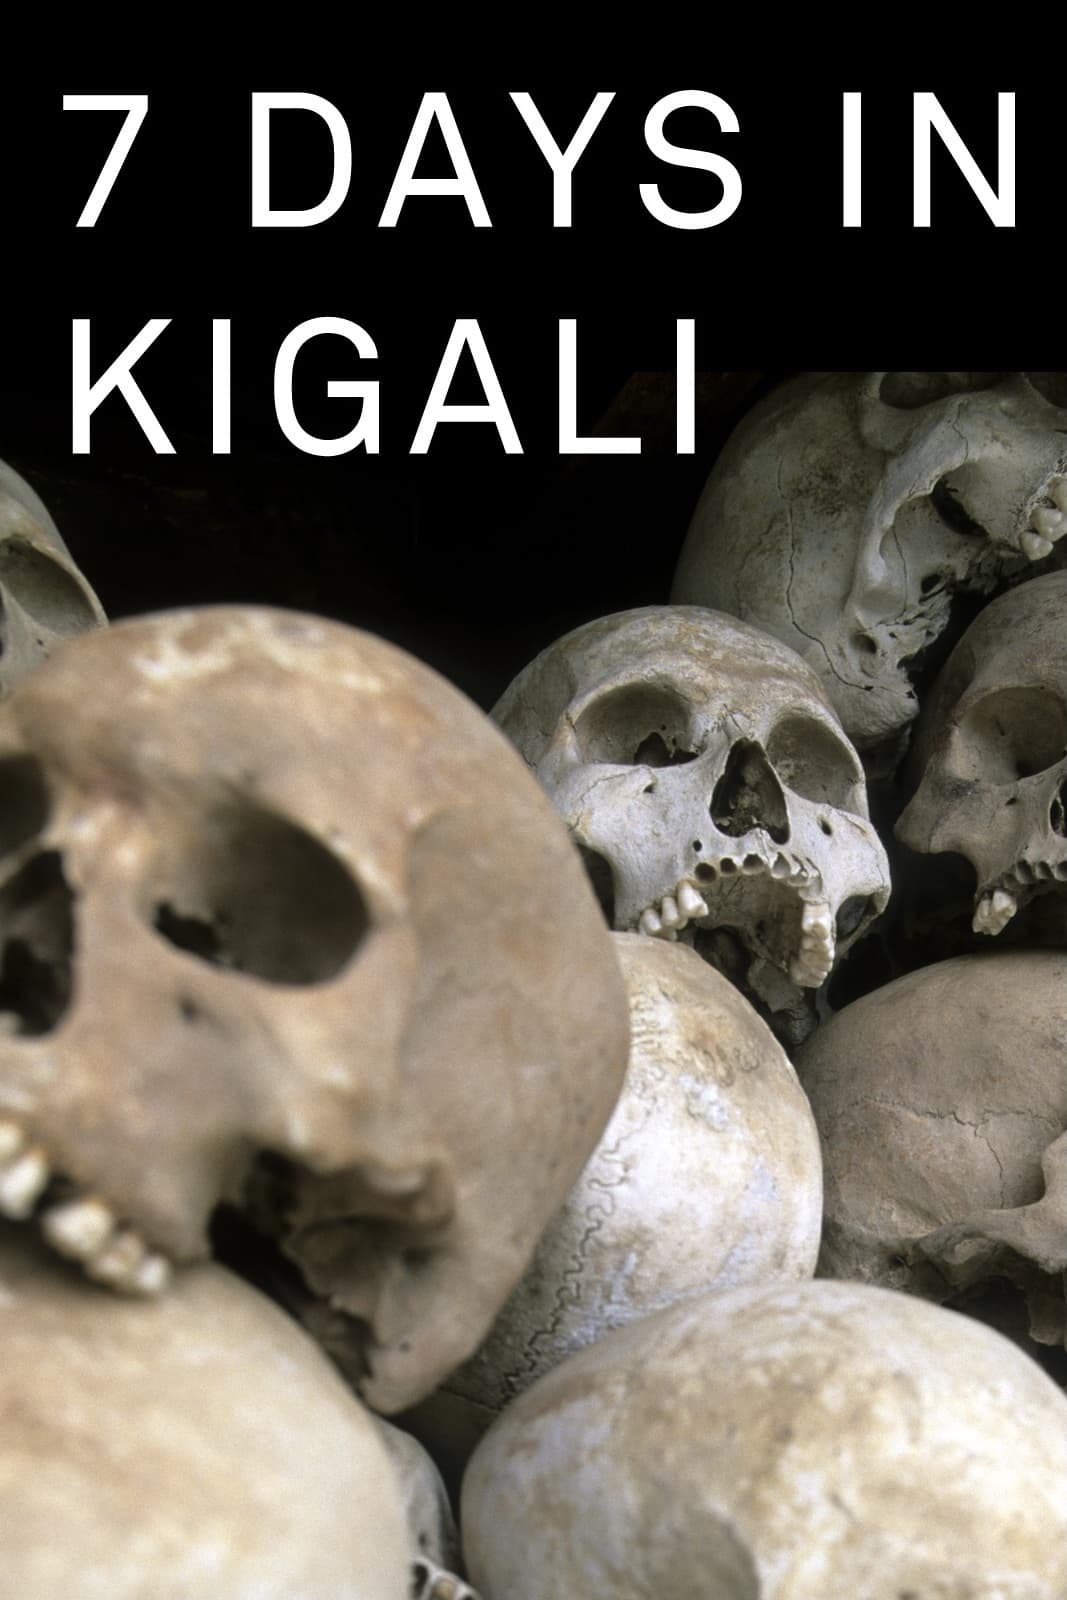 7 Days in Kigali, the week when Rwanda changed